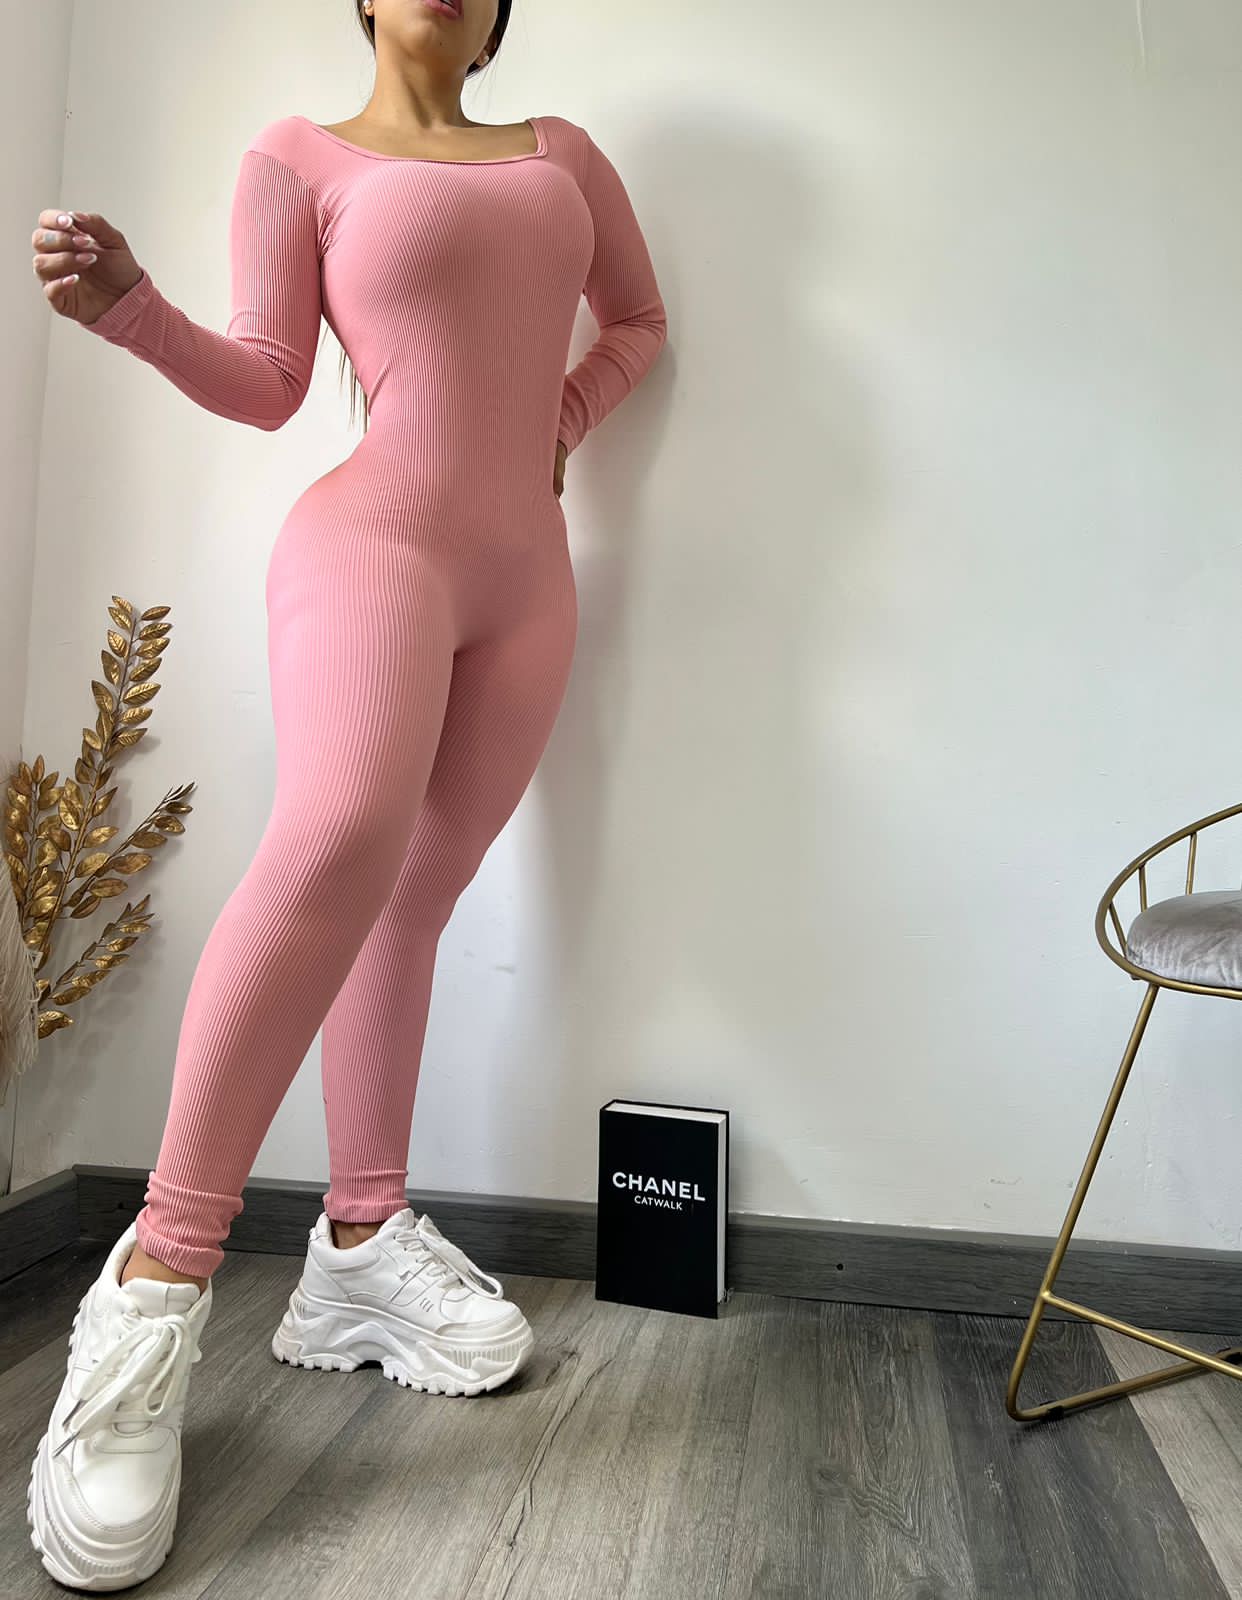 Long-sleeved pink jumpsuit